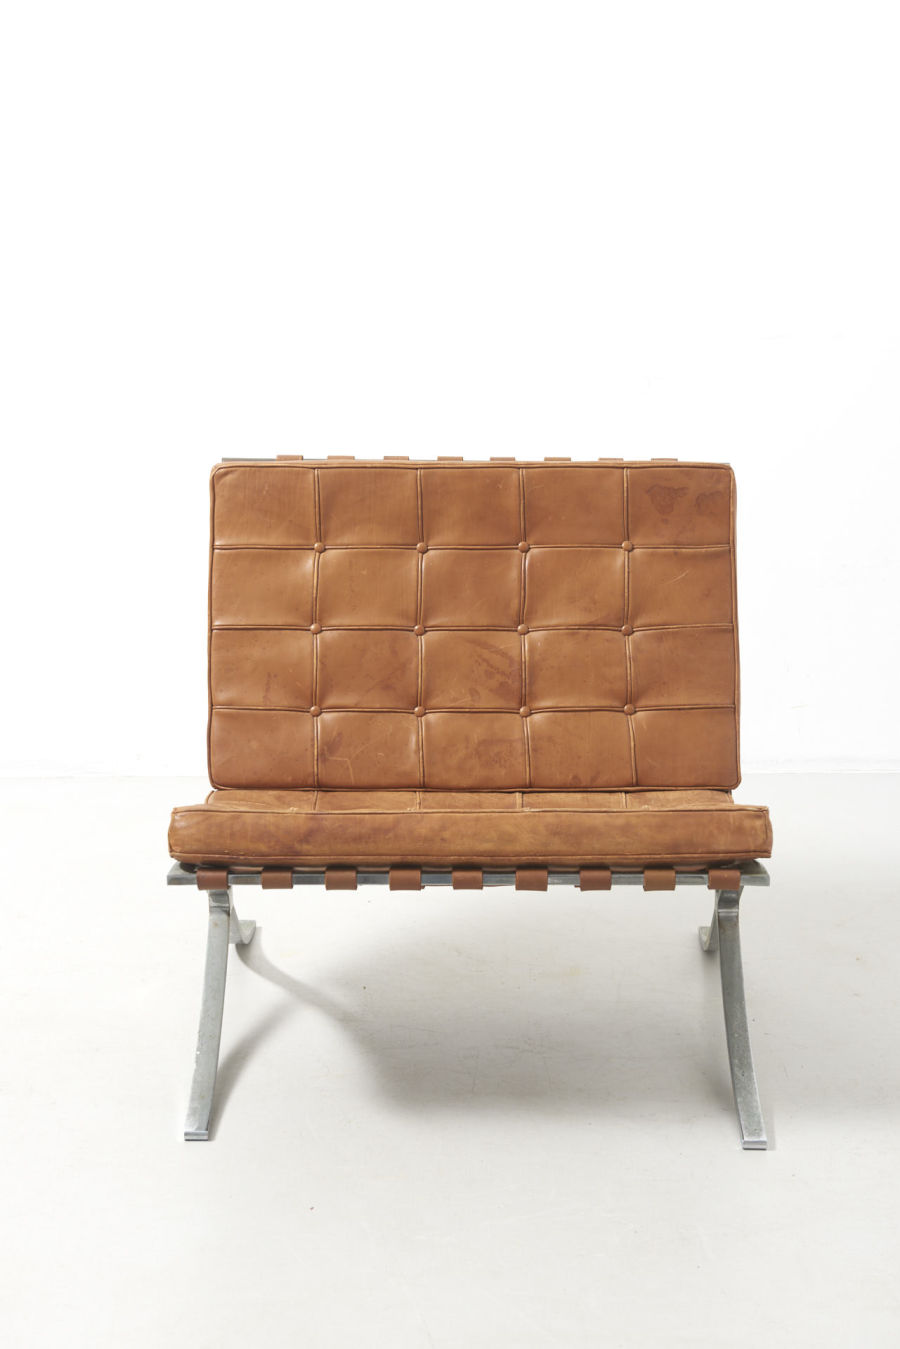 modestfurniture-vintage-2580-mies-van-der-rohe-barcelona-chair-knoll-internaltional02